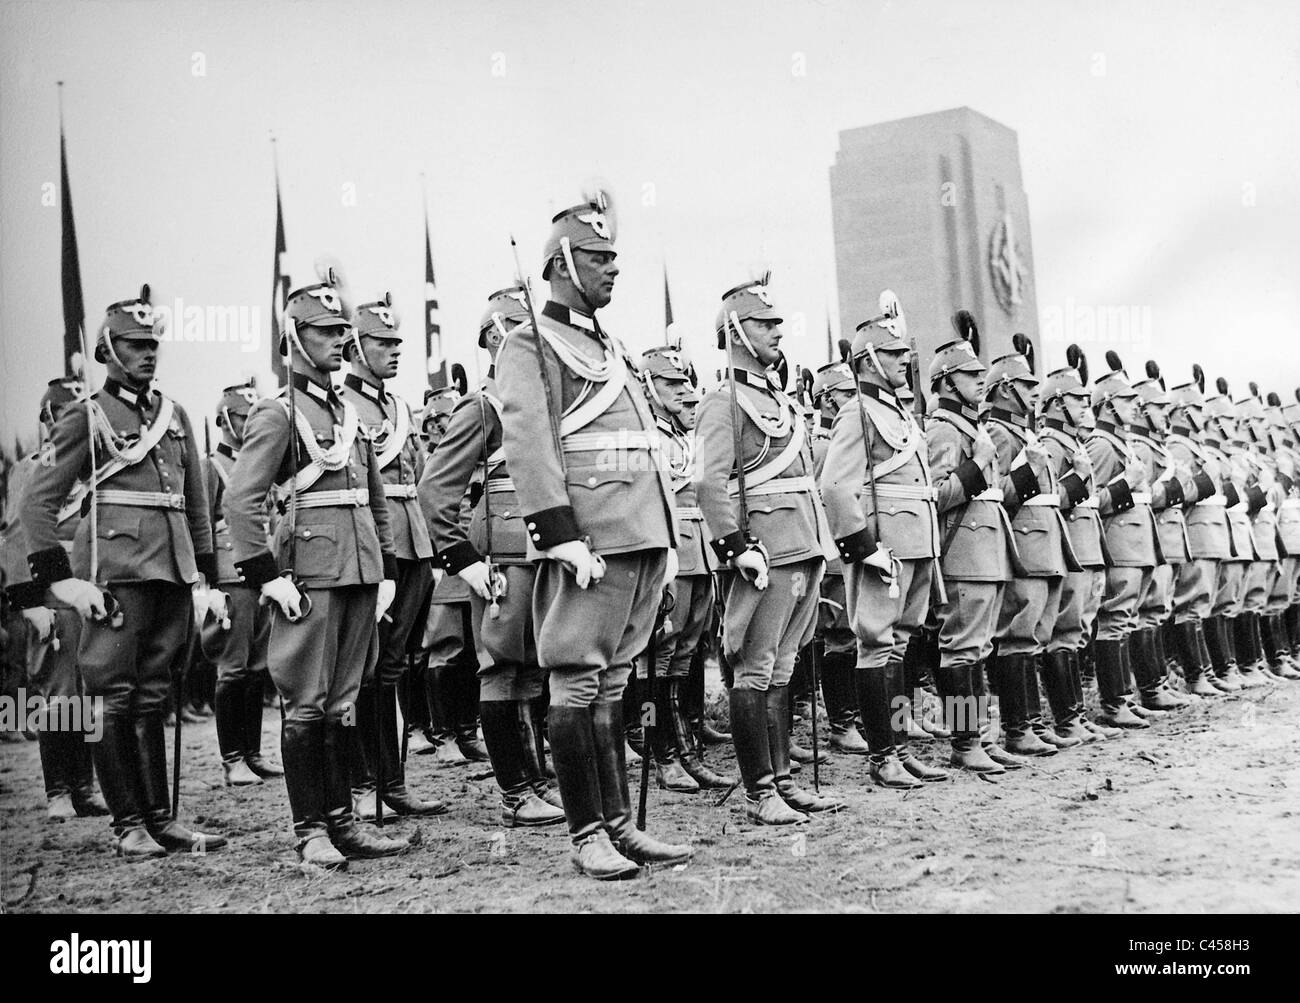 Polizei in Parade-Uniformen, 1937 Stockfoto